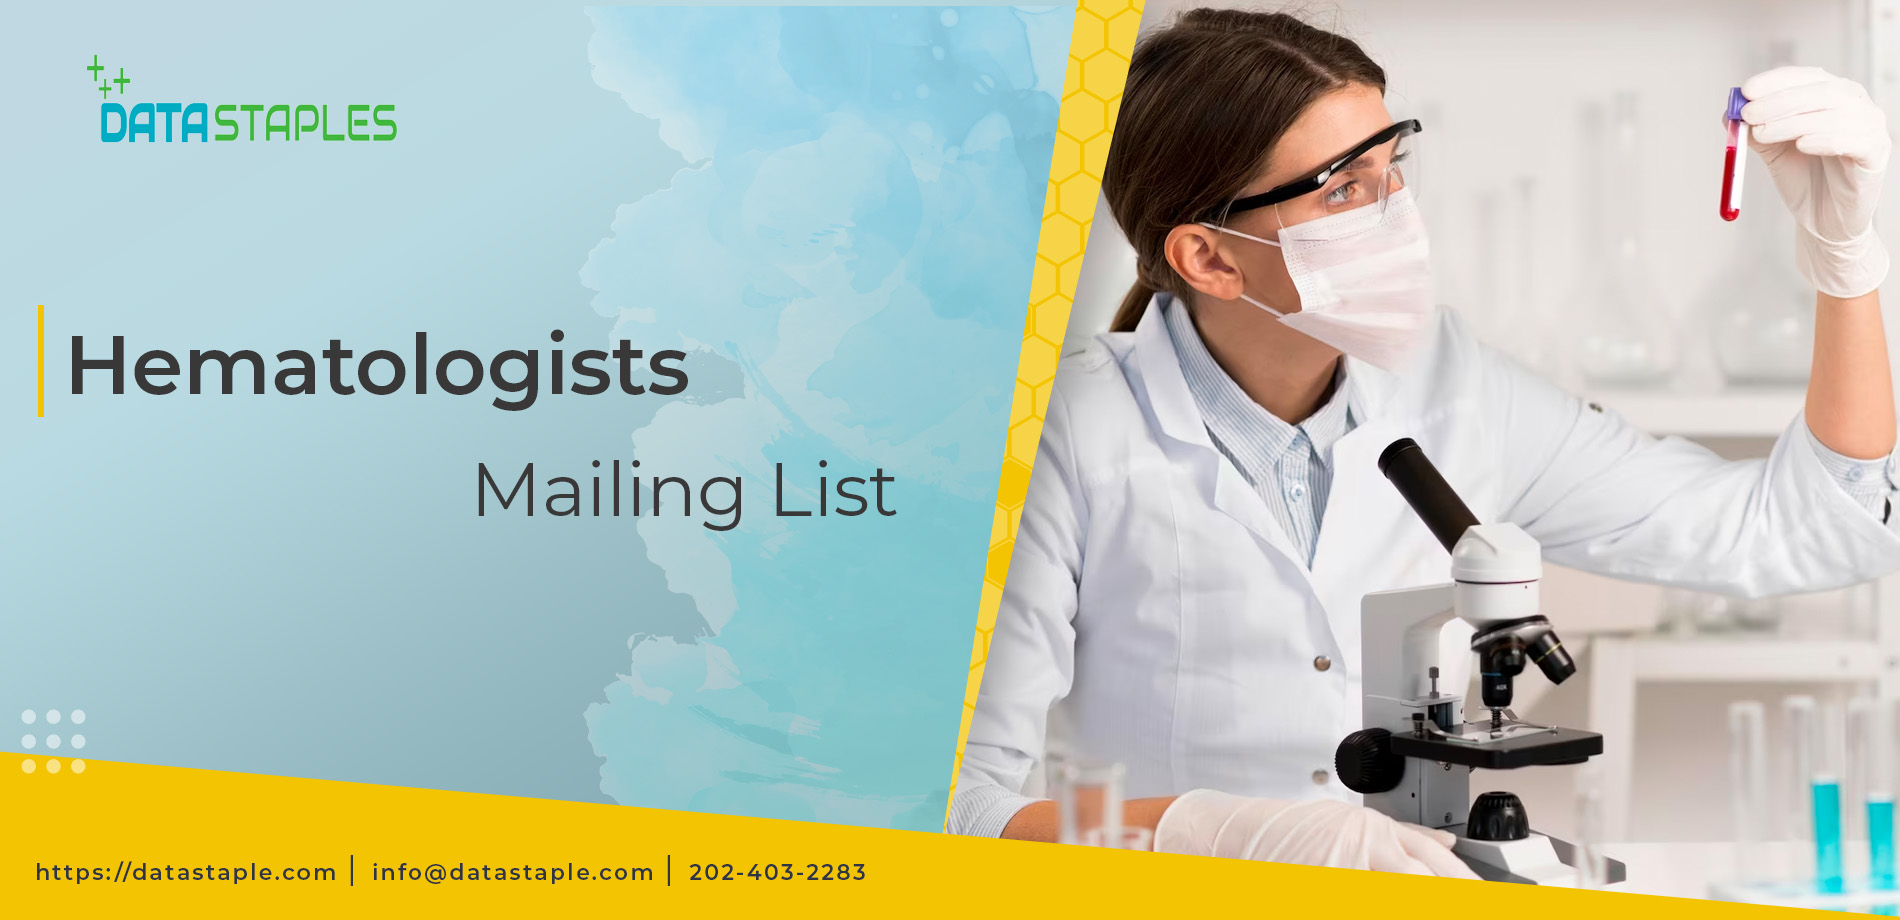 Hematologists Mailing List | DataStaples